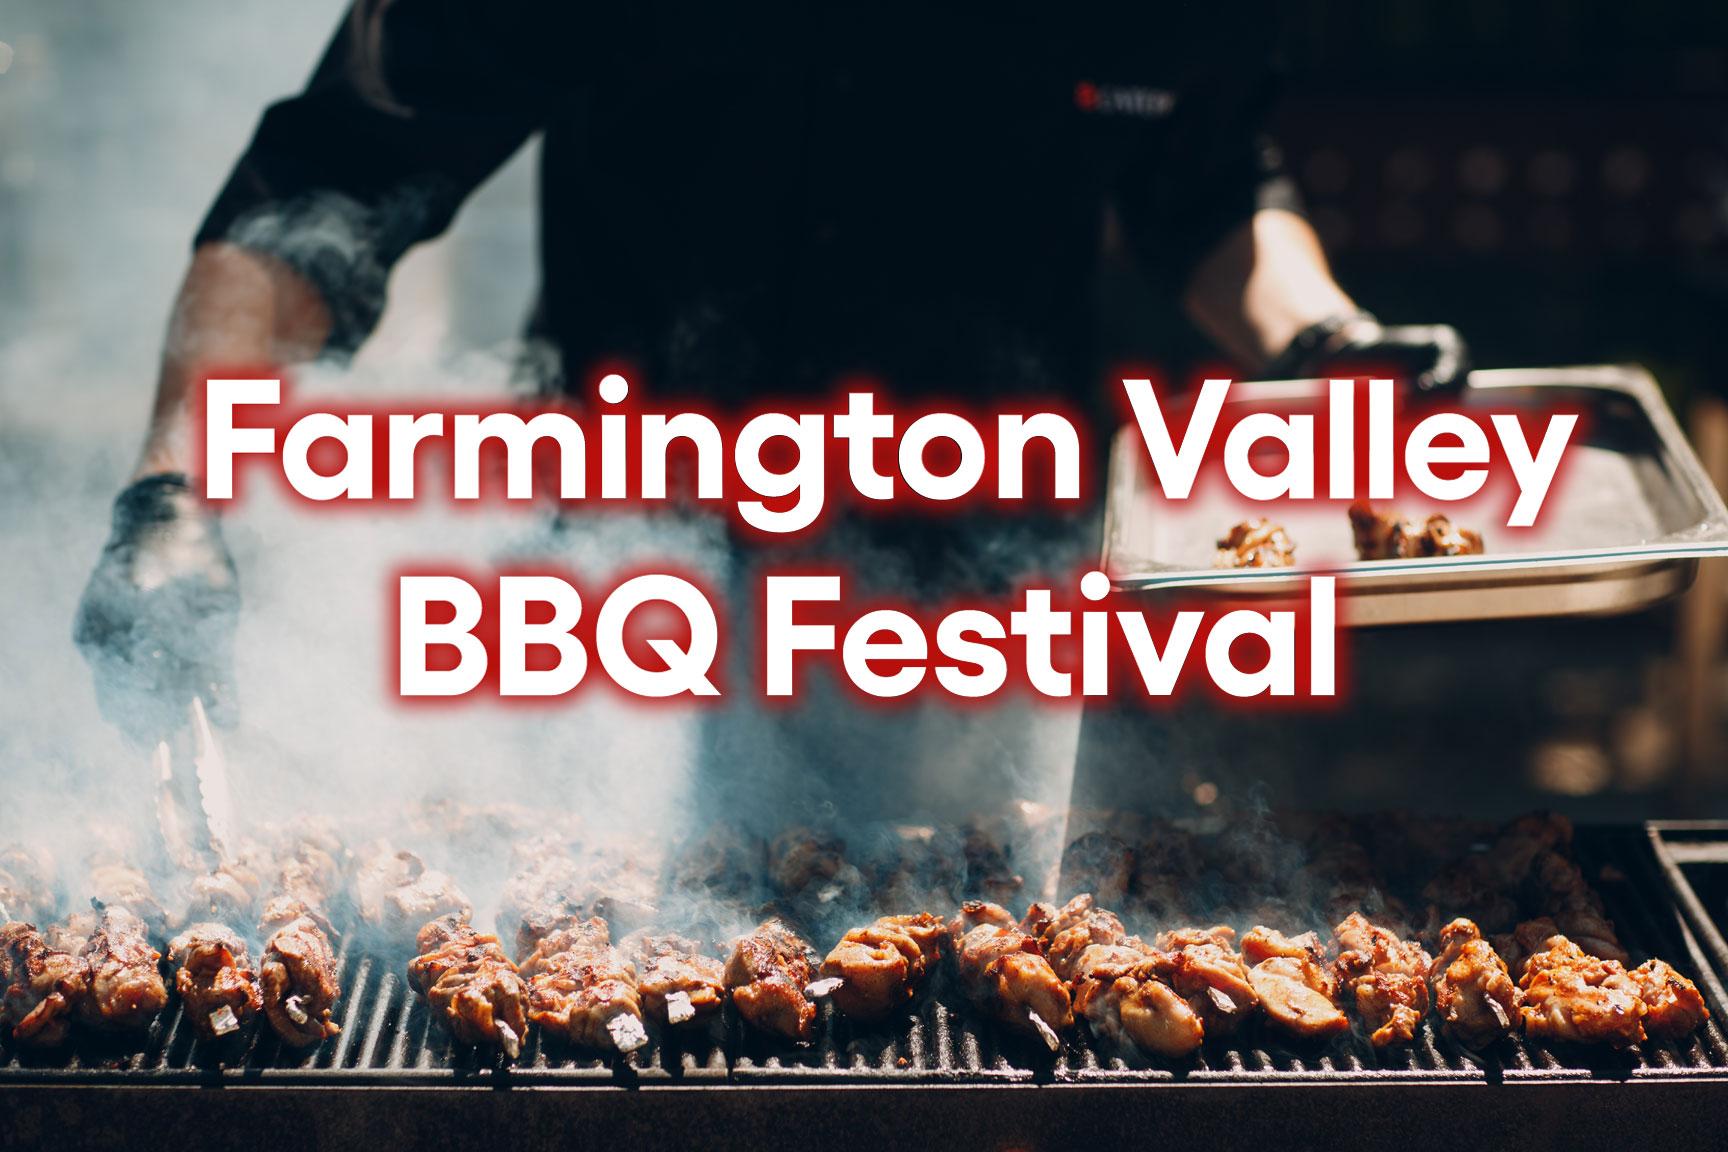 Farmington Valley BBQ Festival at Peckham Park